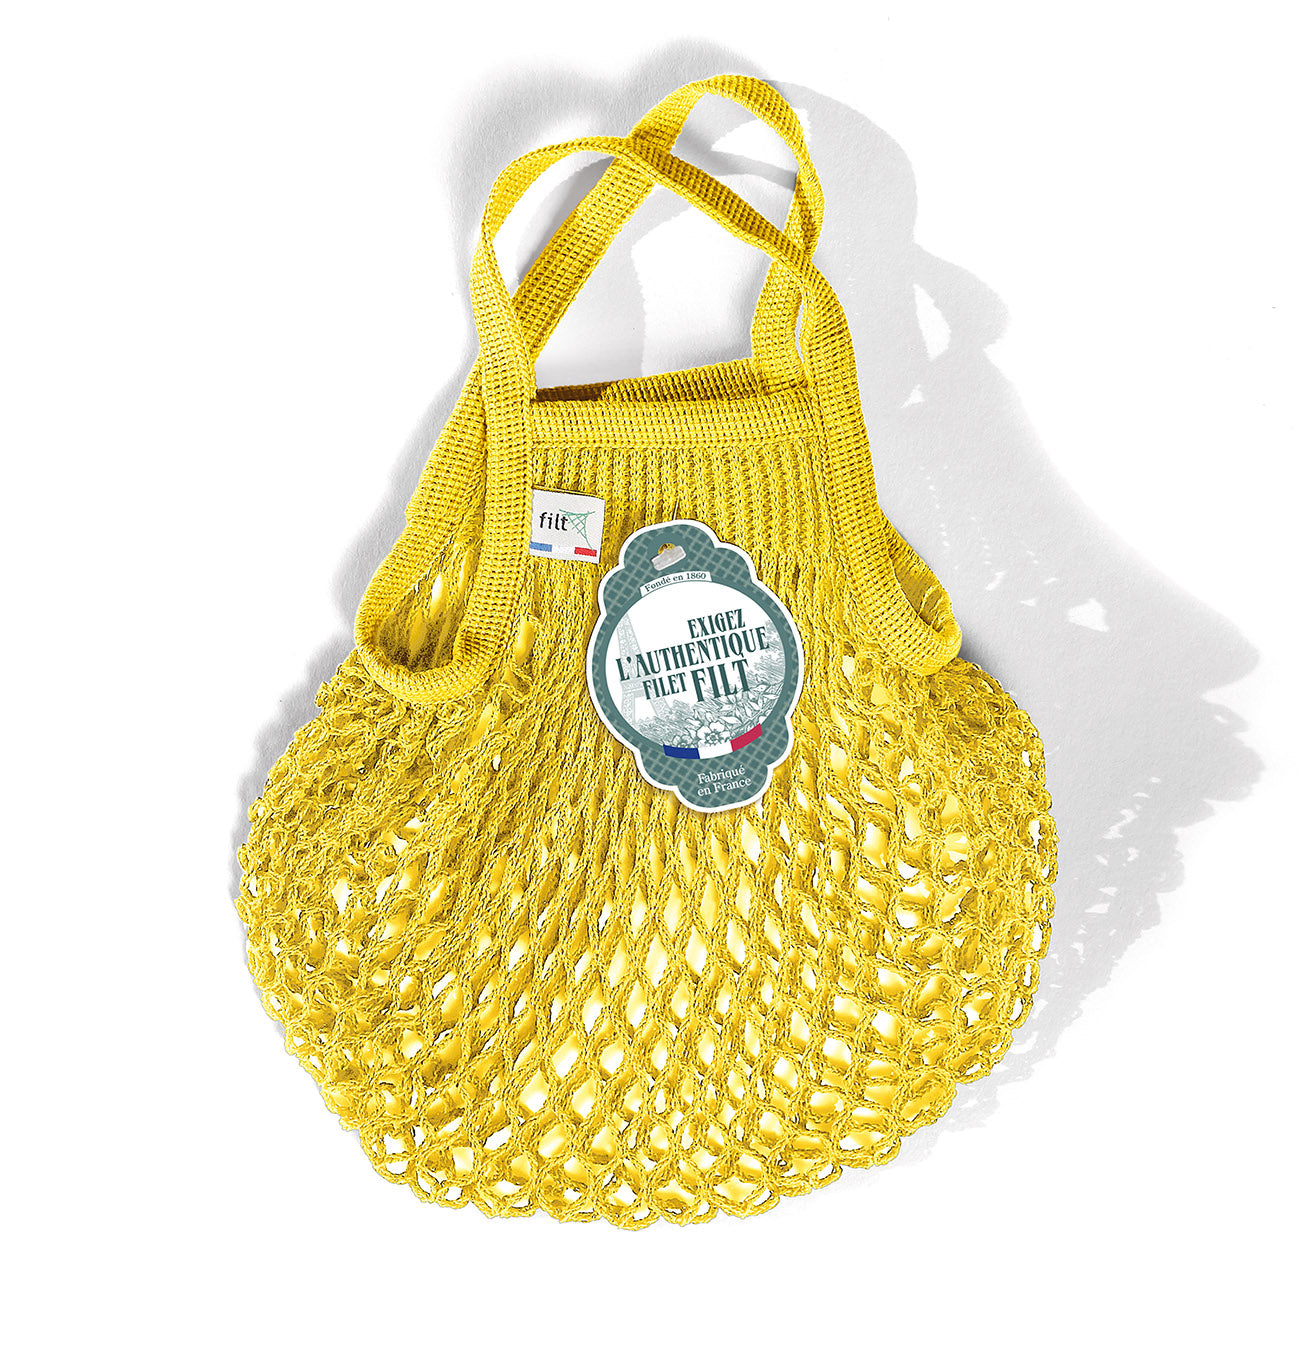 Filt Mini Bag in Bright Yellow - Bag - Filt - Bags - Brand_Filt - Shopping Bags - Textiles_Shoppers - 301_Jaunesolarium